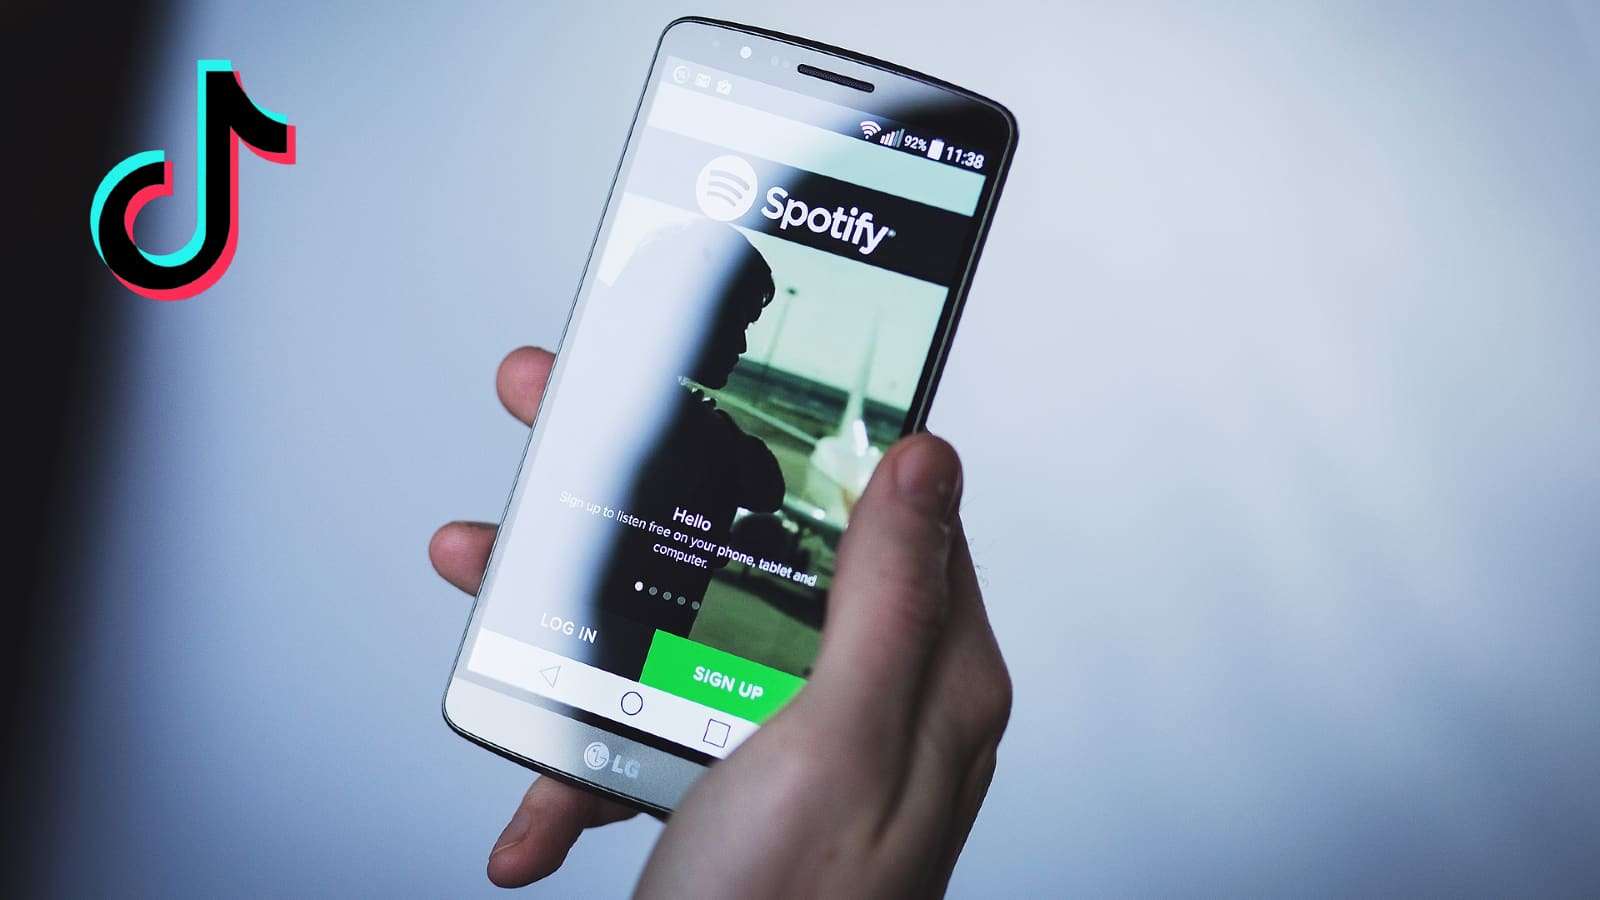 Spotify app on phone with TikTok logo